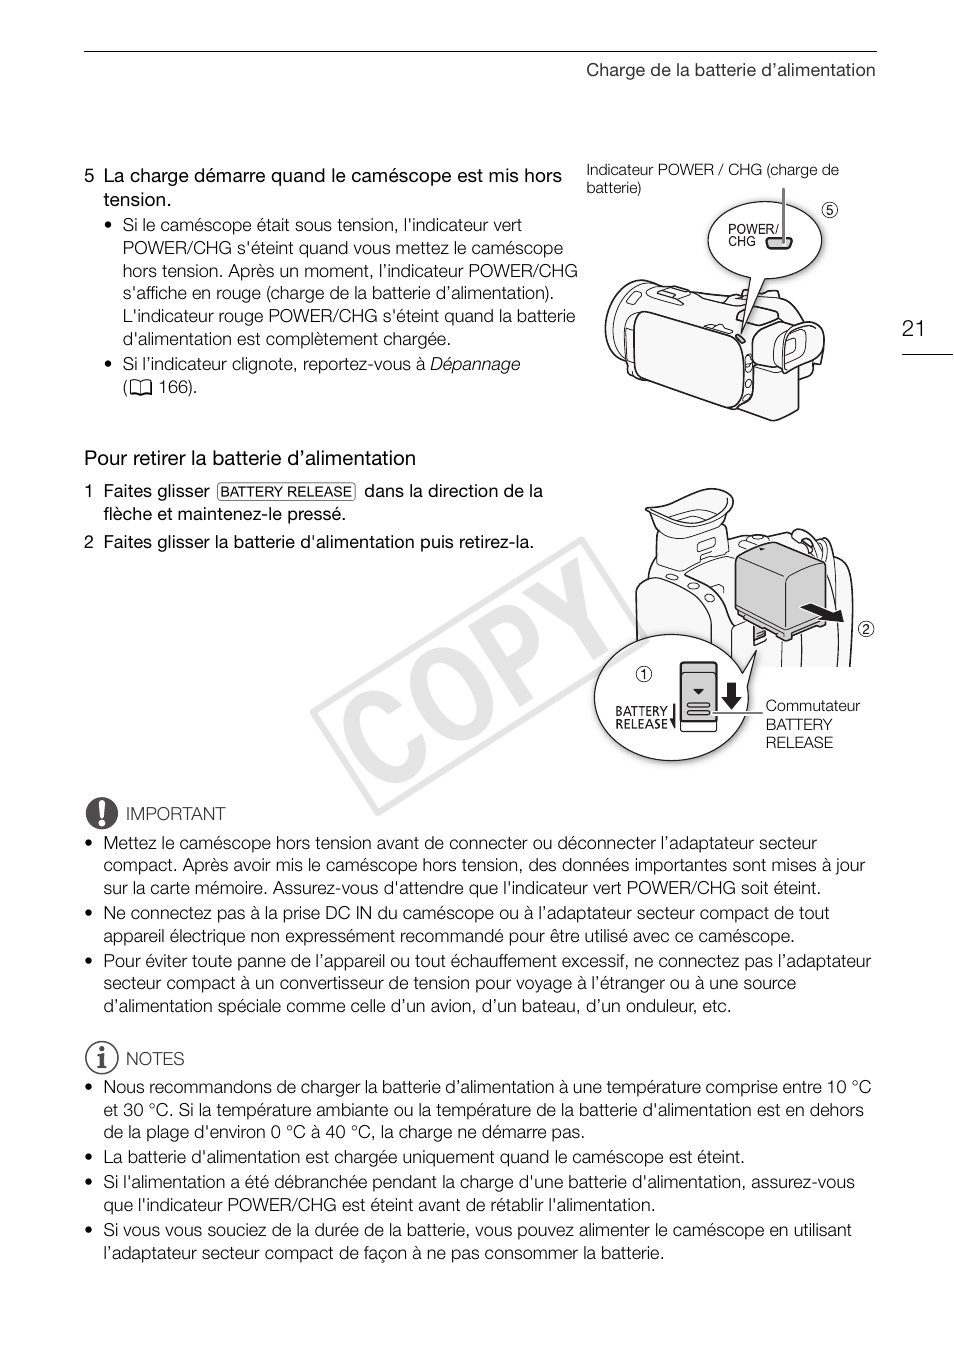 Cop y | Canon LEGRIA HF G30 Manuel d'utilisation | Page 21 / 195